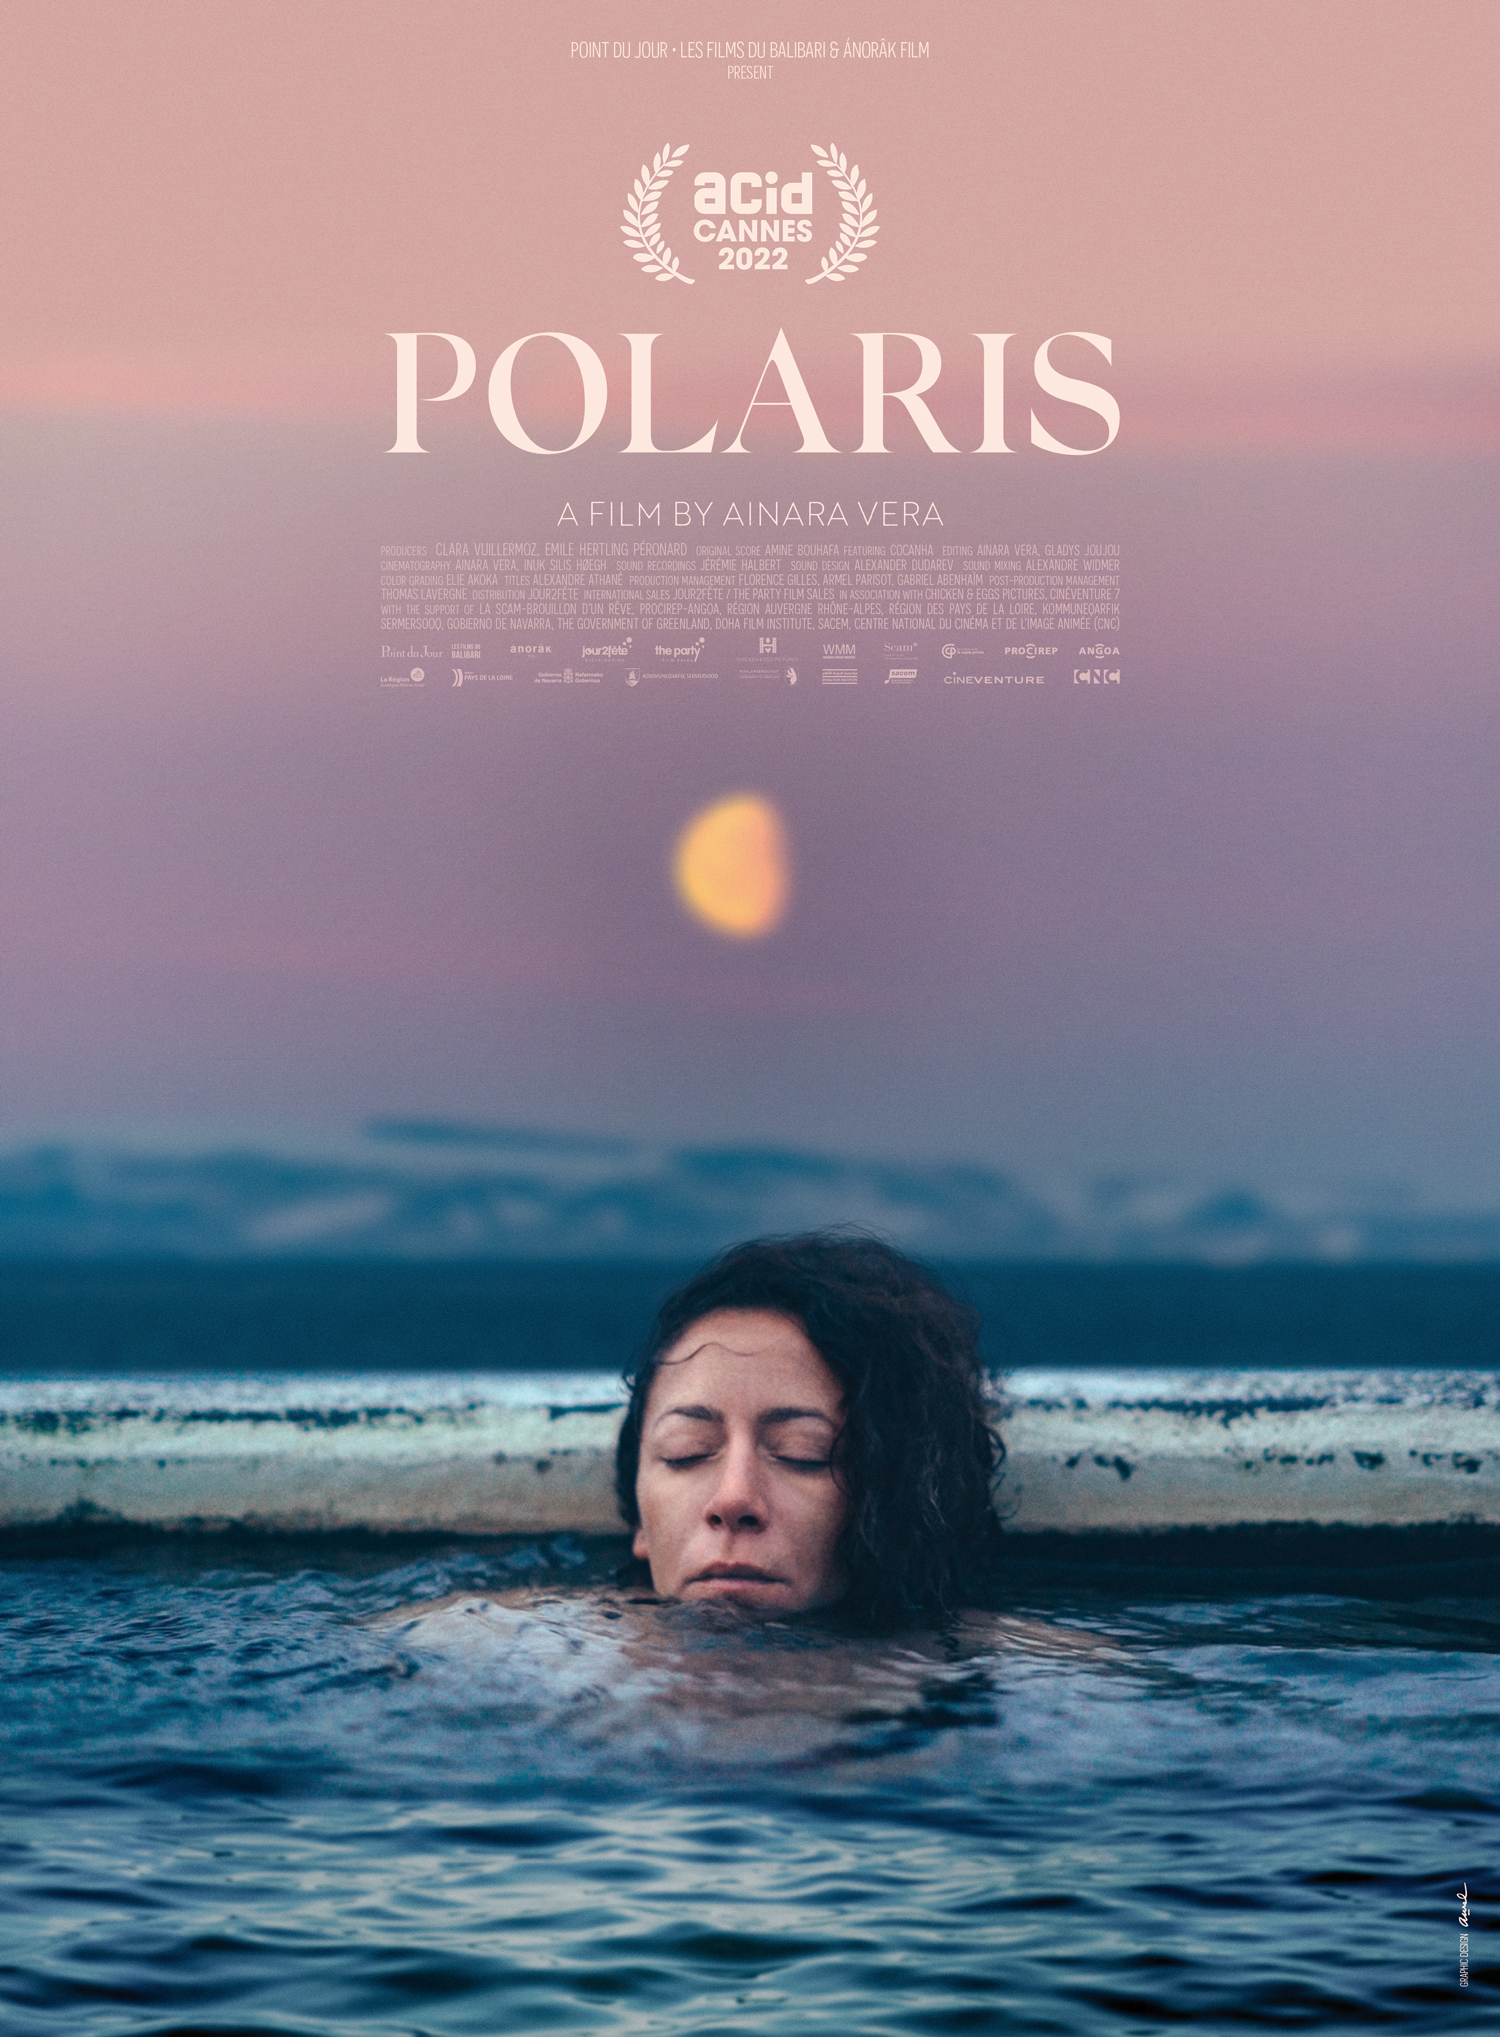 POLARIS - THE PARTY FILM SALES